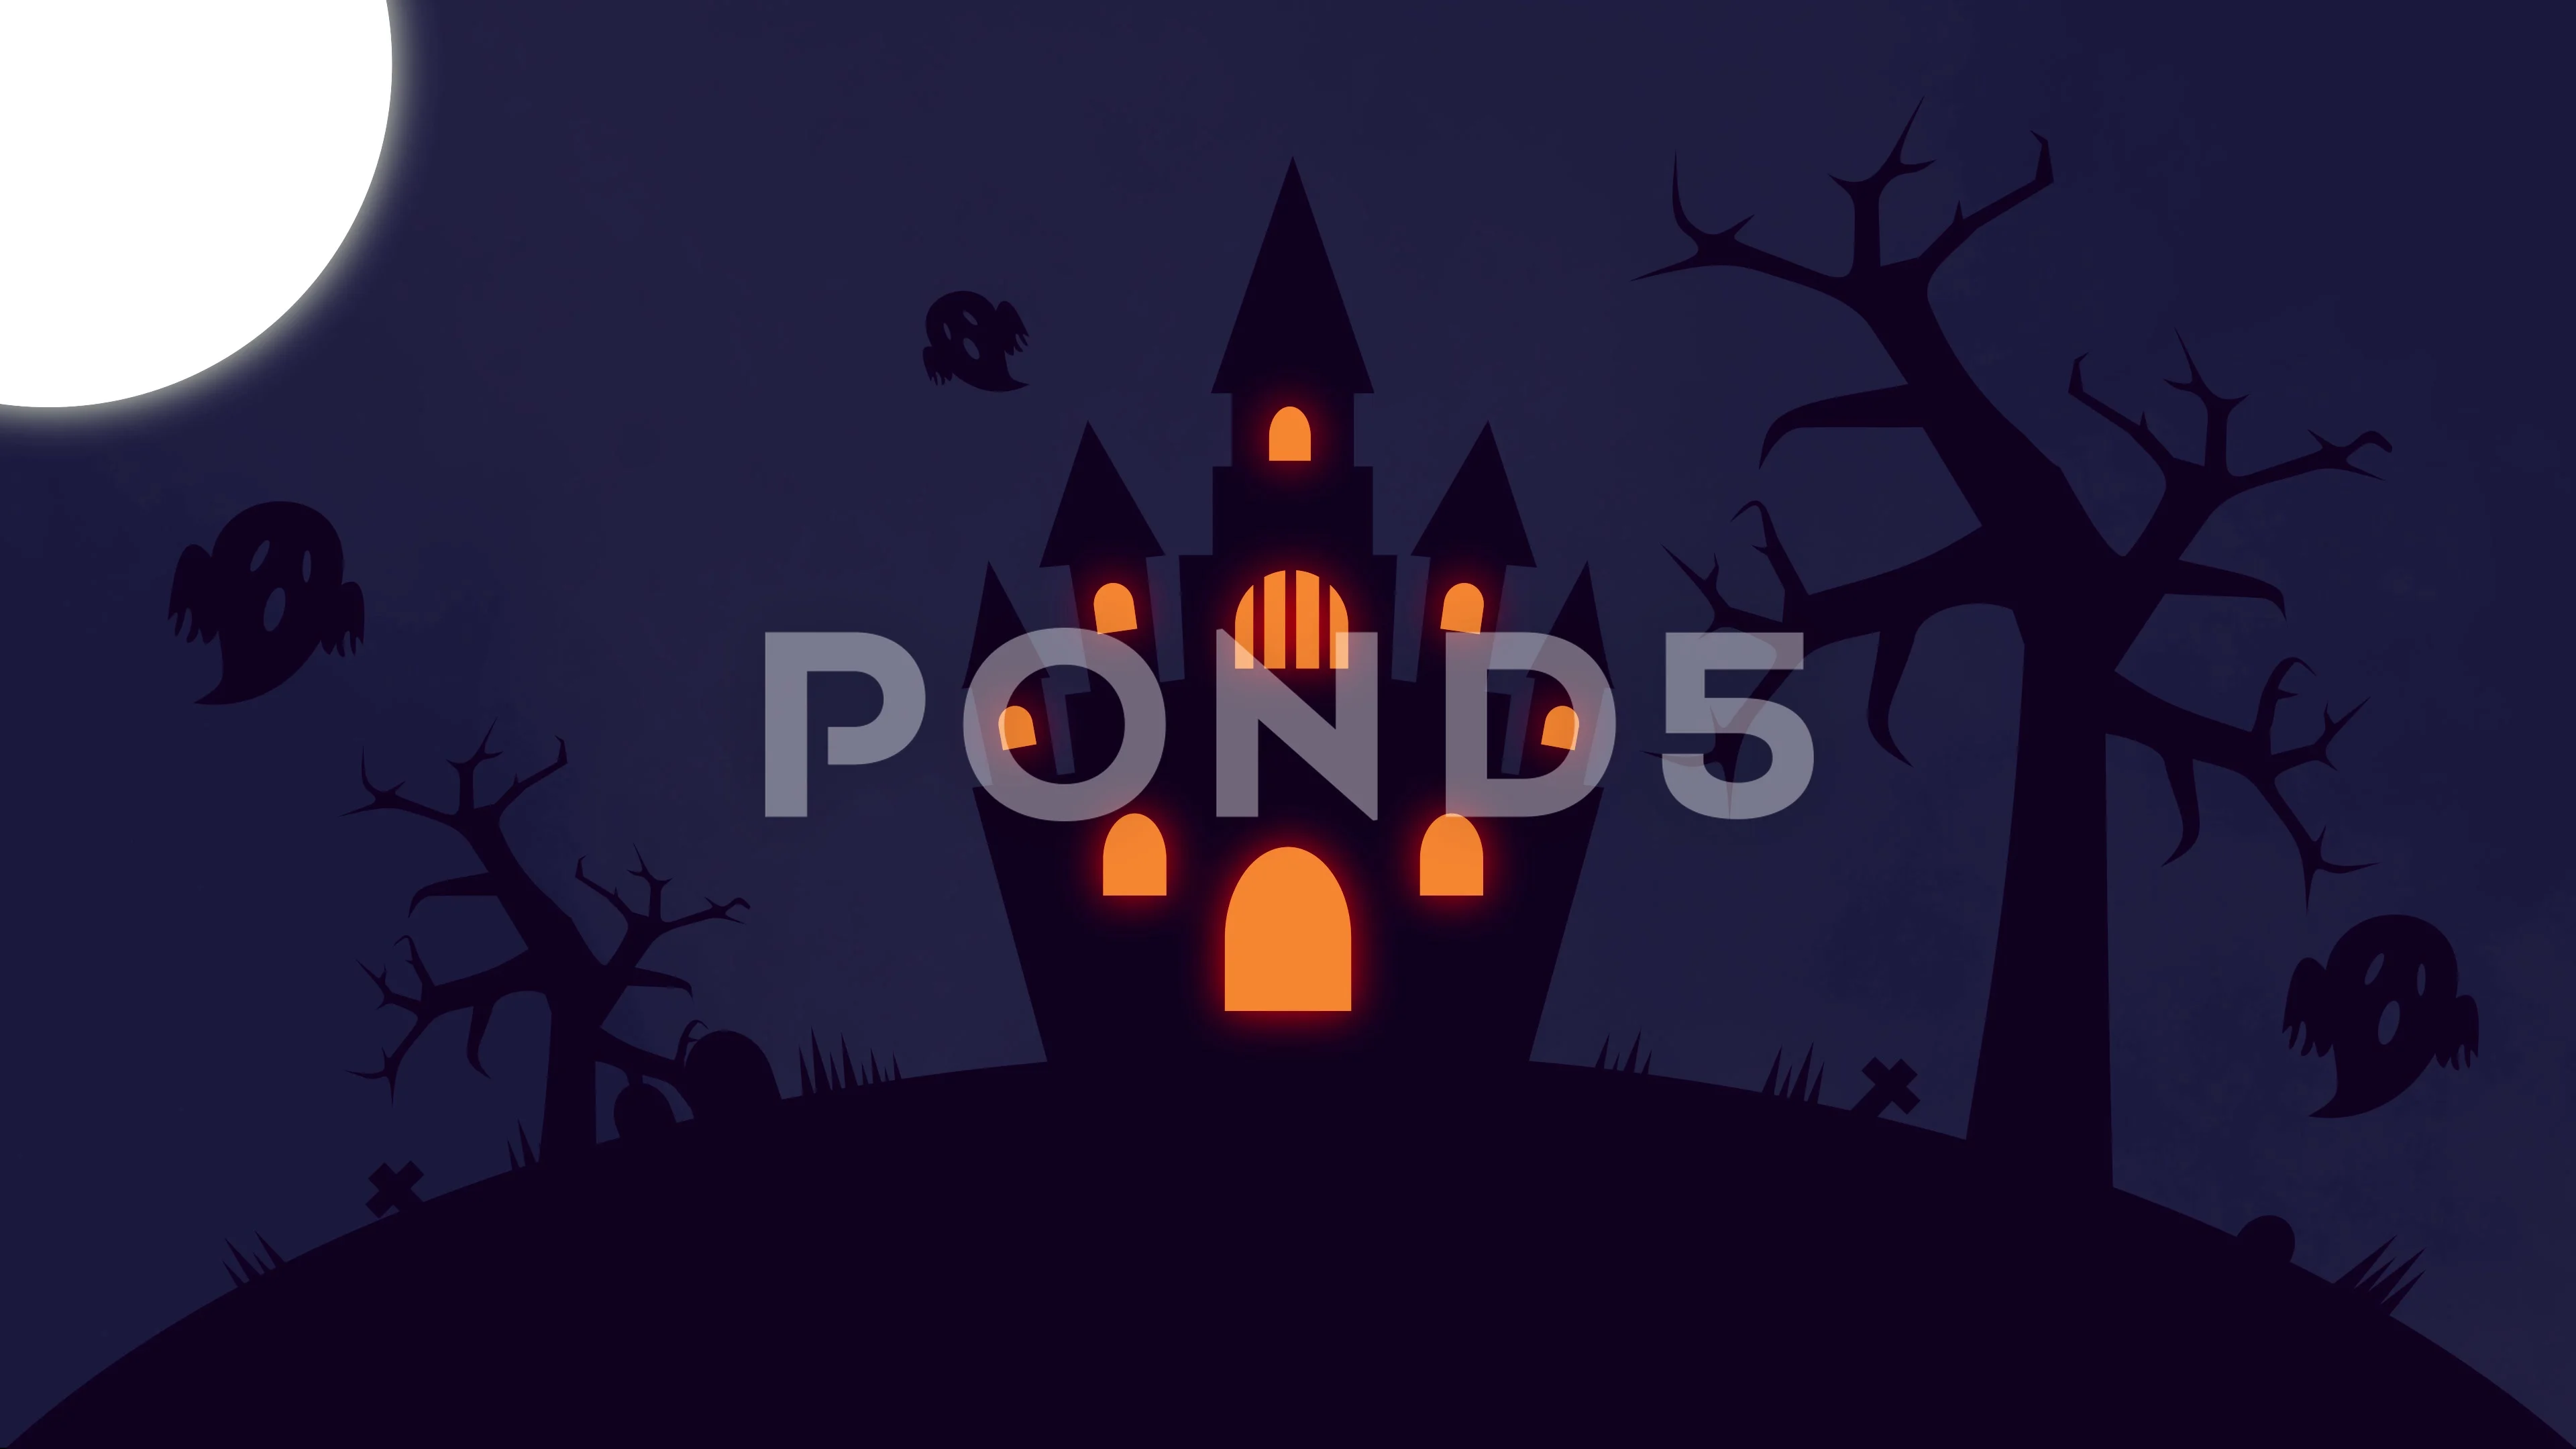 haunted castle animated